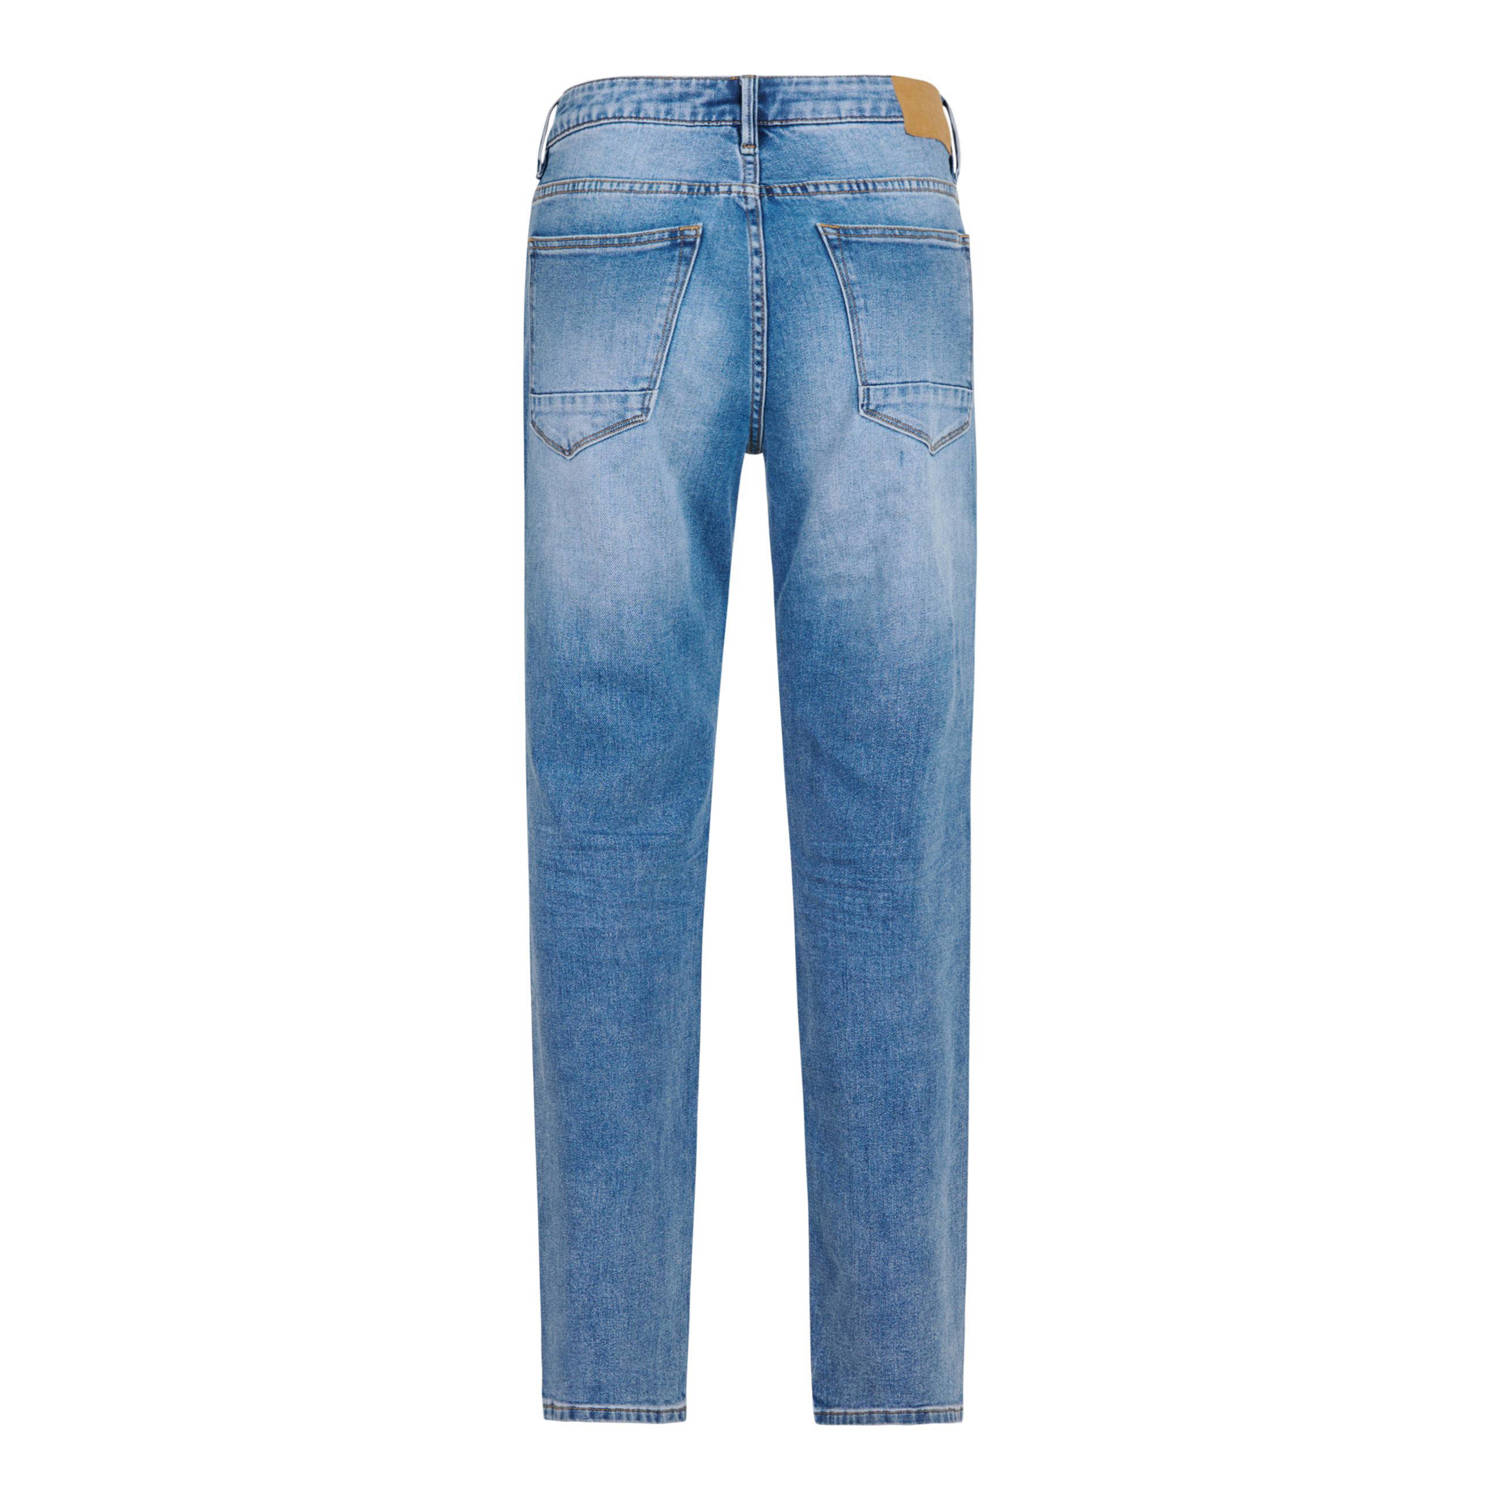 Shoeby straight fit L32 jeans mediumstone